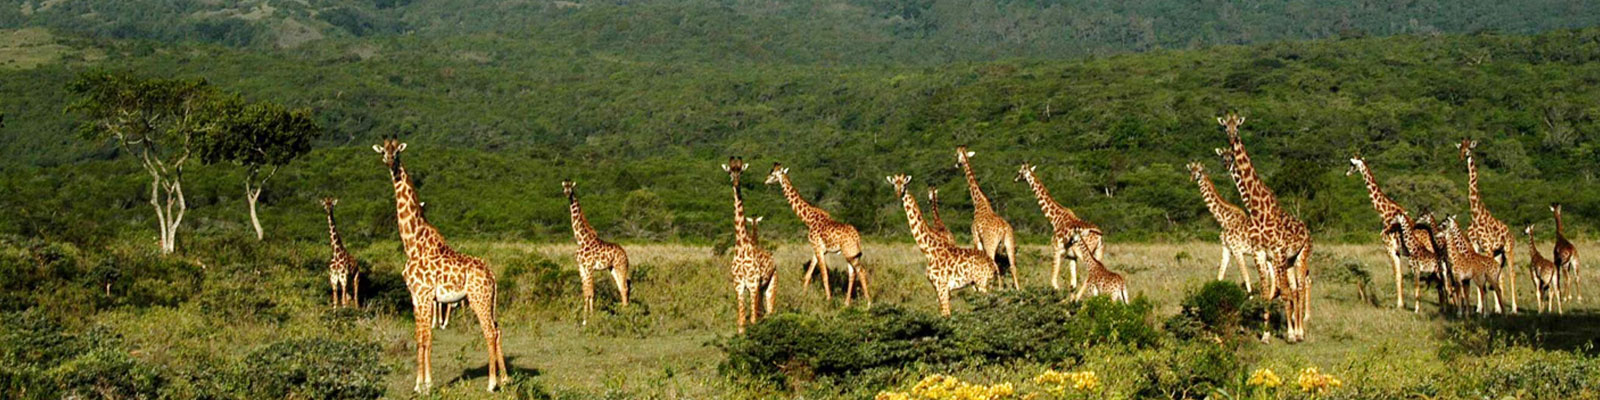  Arusha National Park